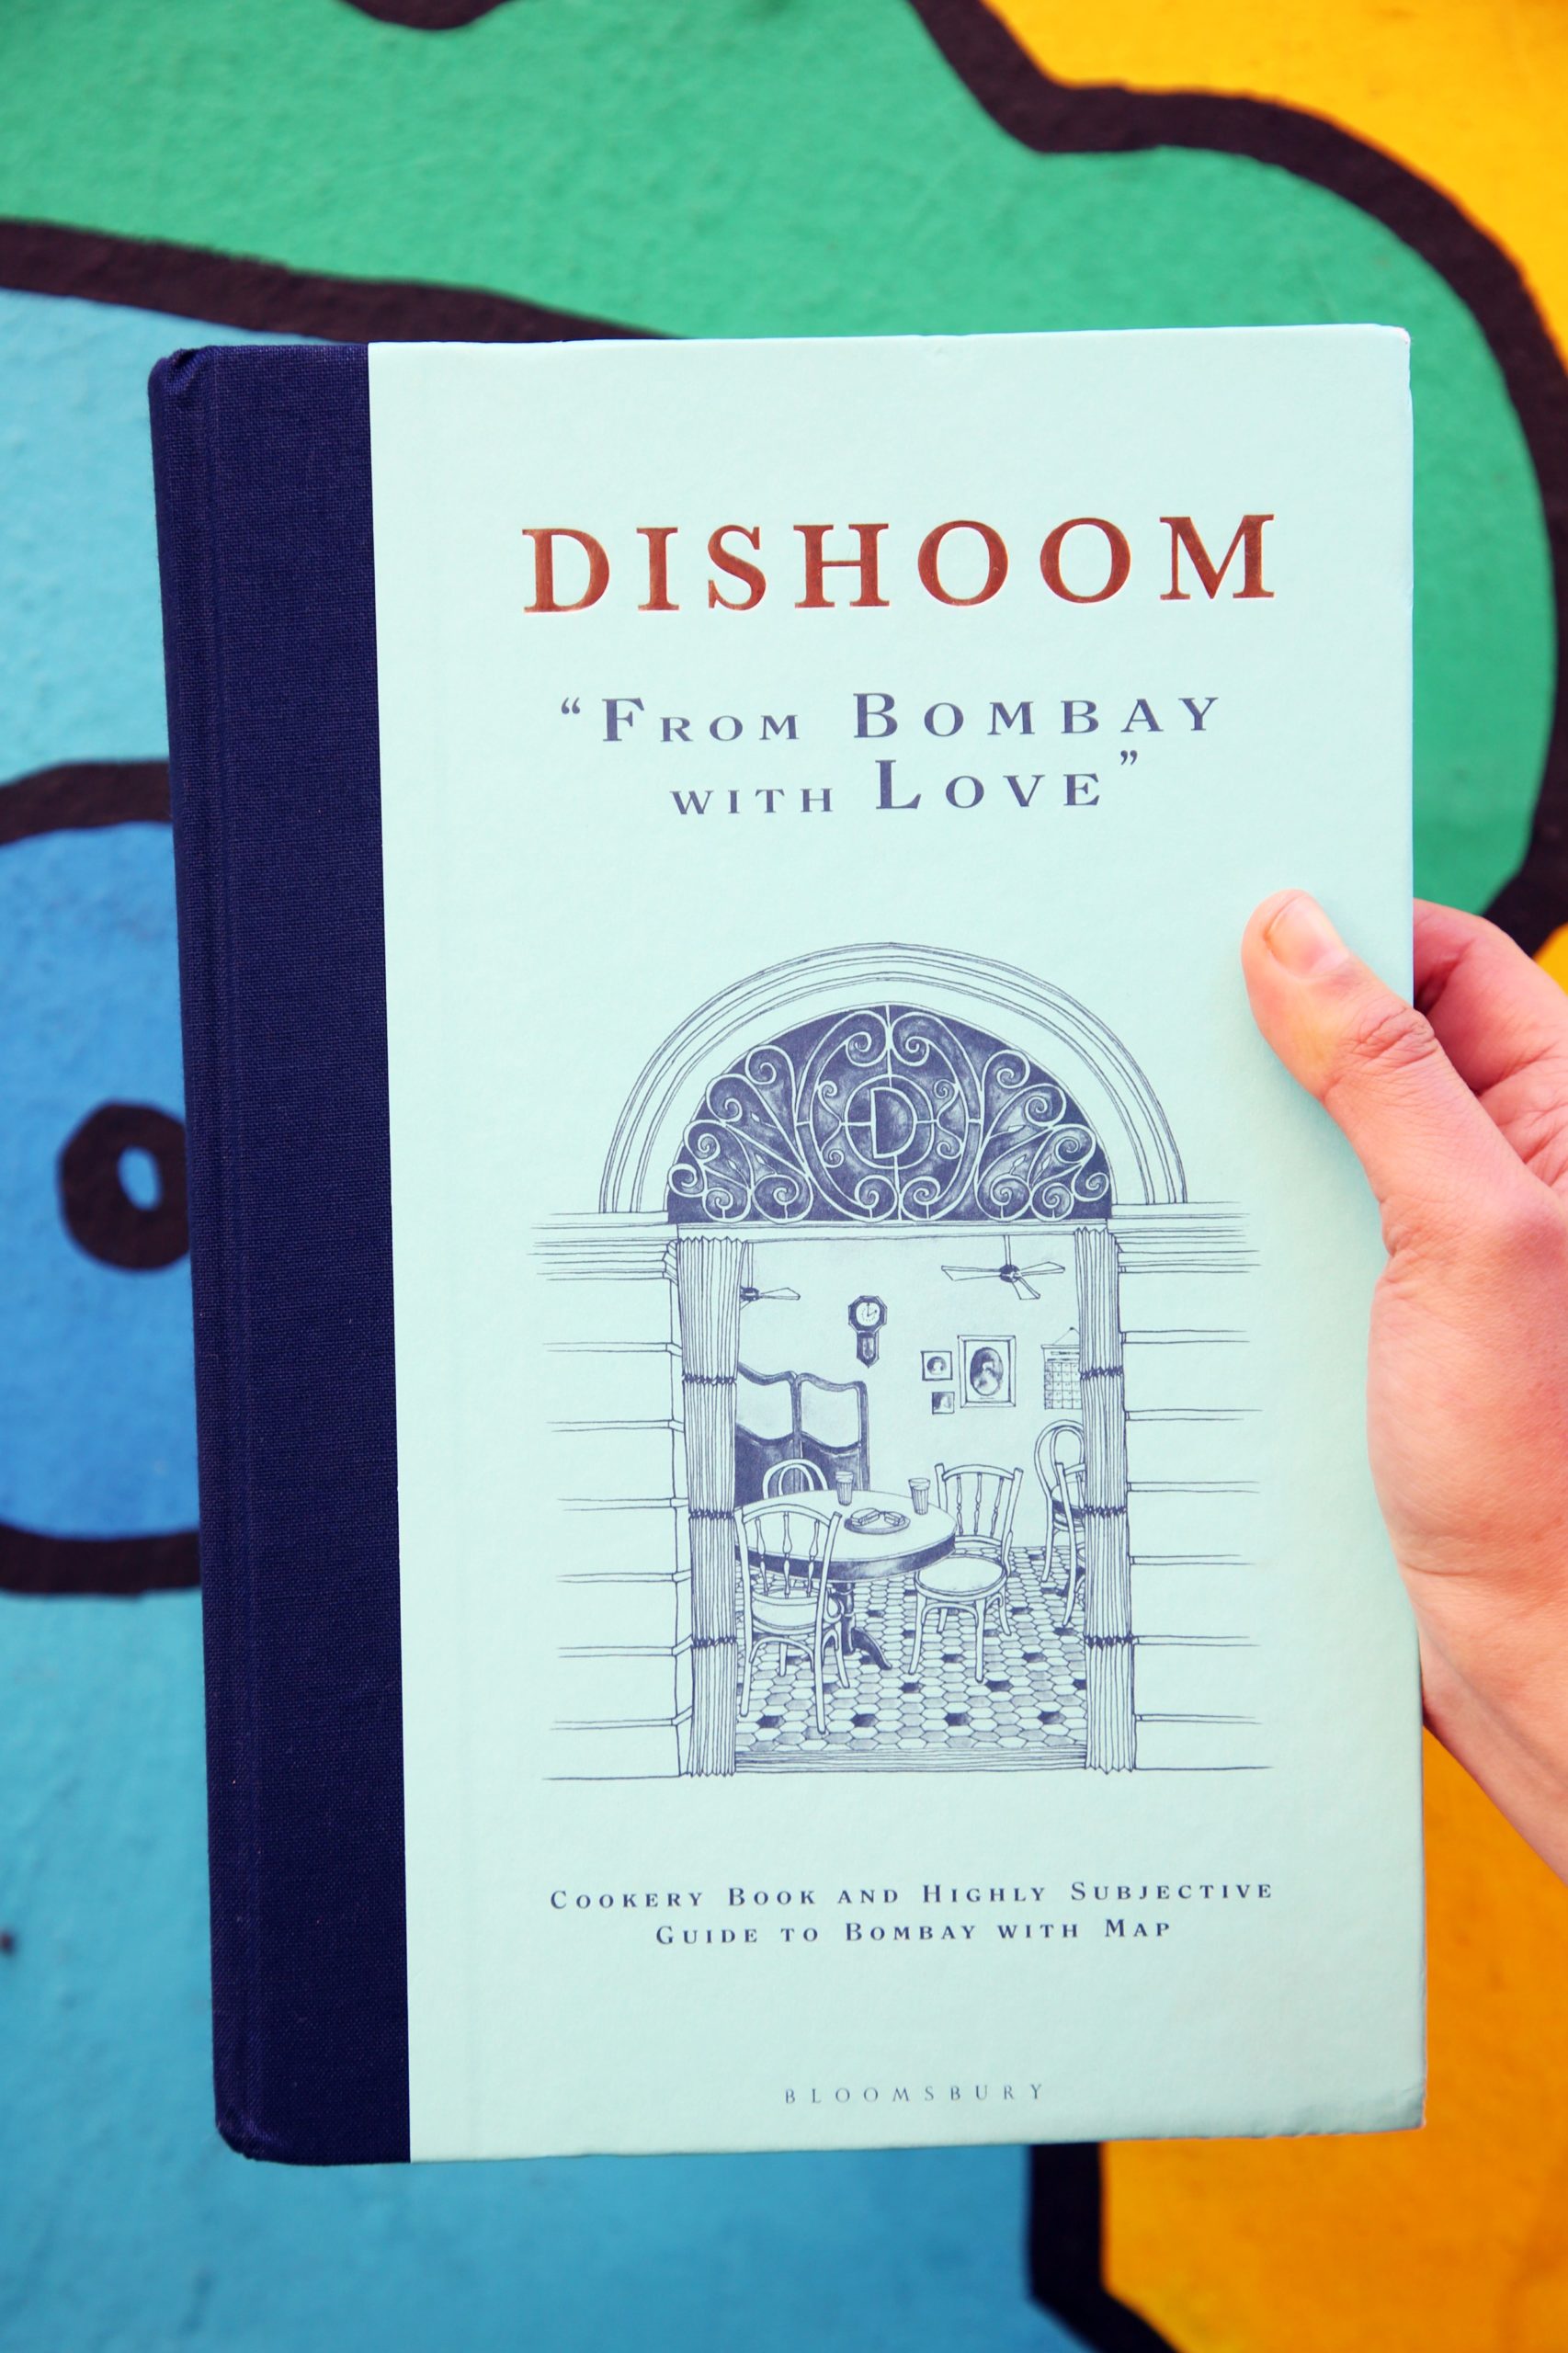 <img src="dishoom.jpg" alt="dishoom cookbook books you should read"/>